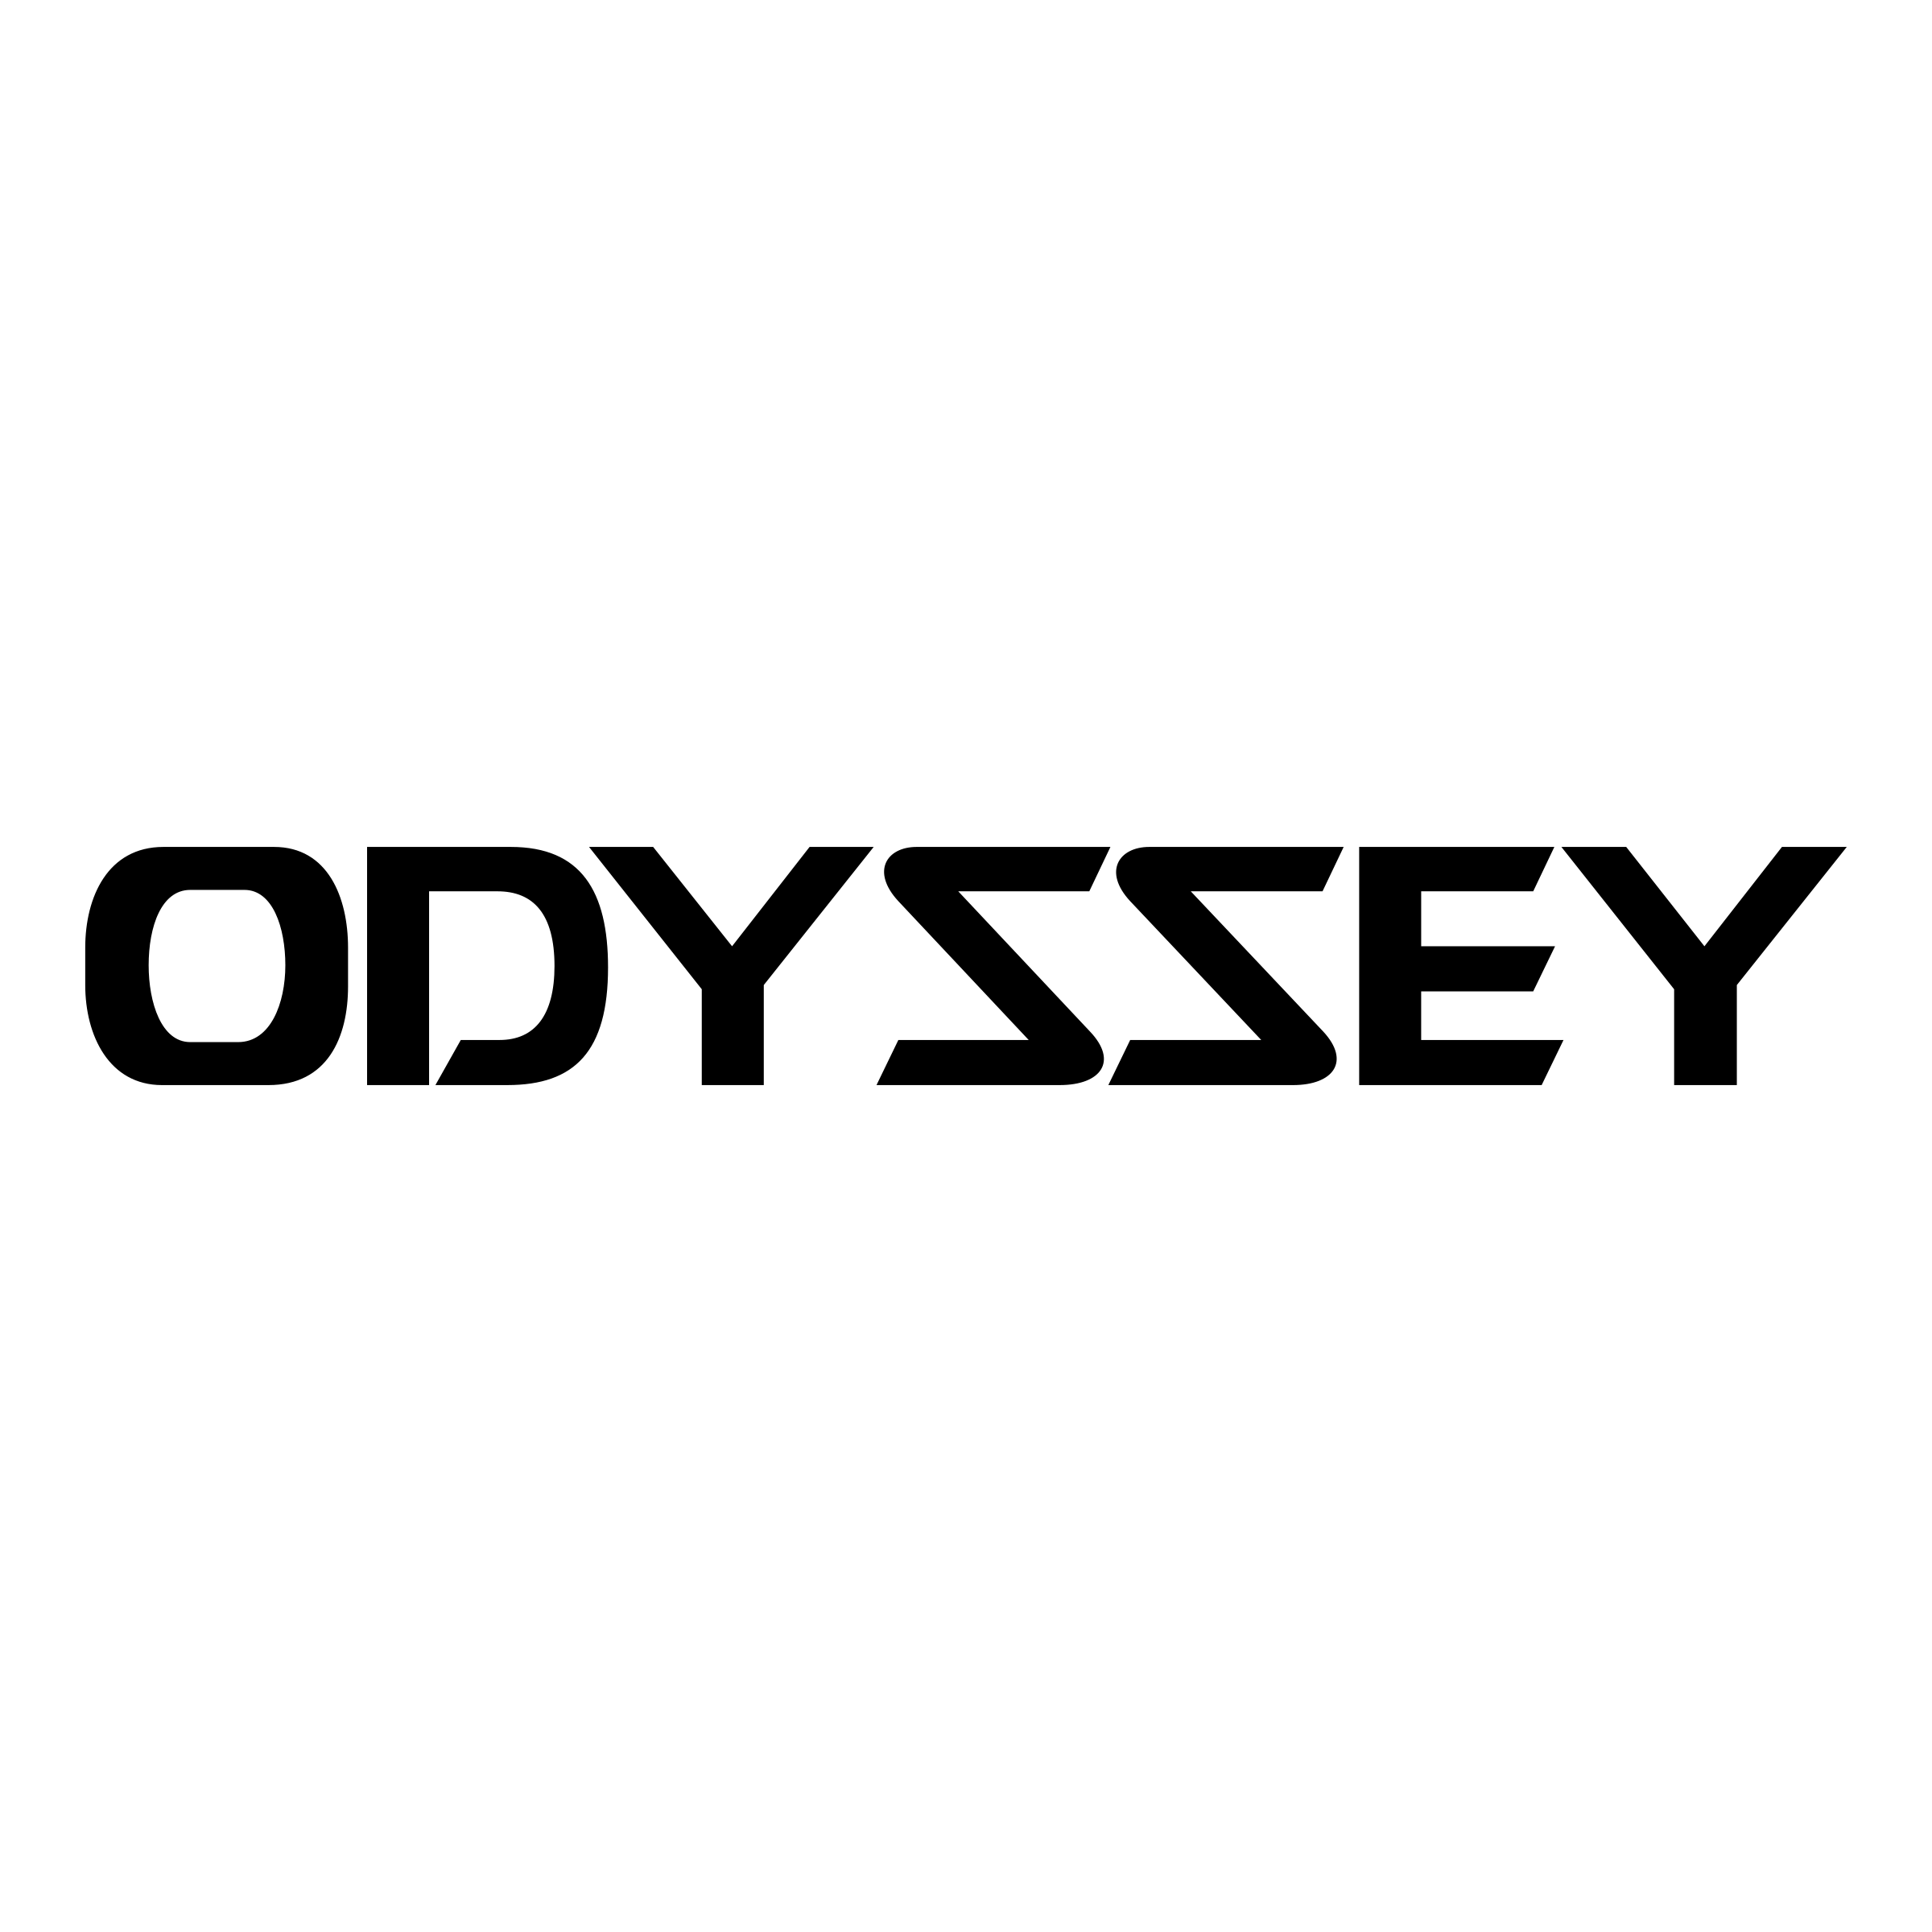 Odyssey Logo - Odyssey Logo PNG Transparent & SVG Vector - Freebie Supply